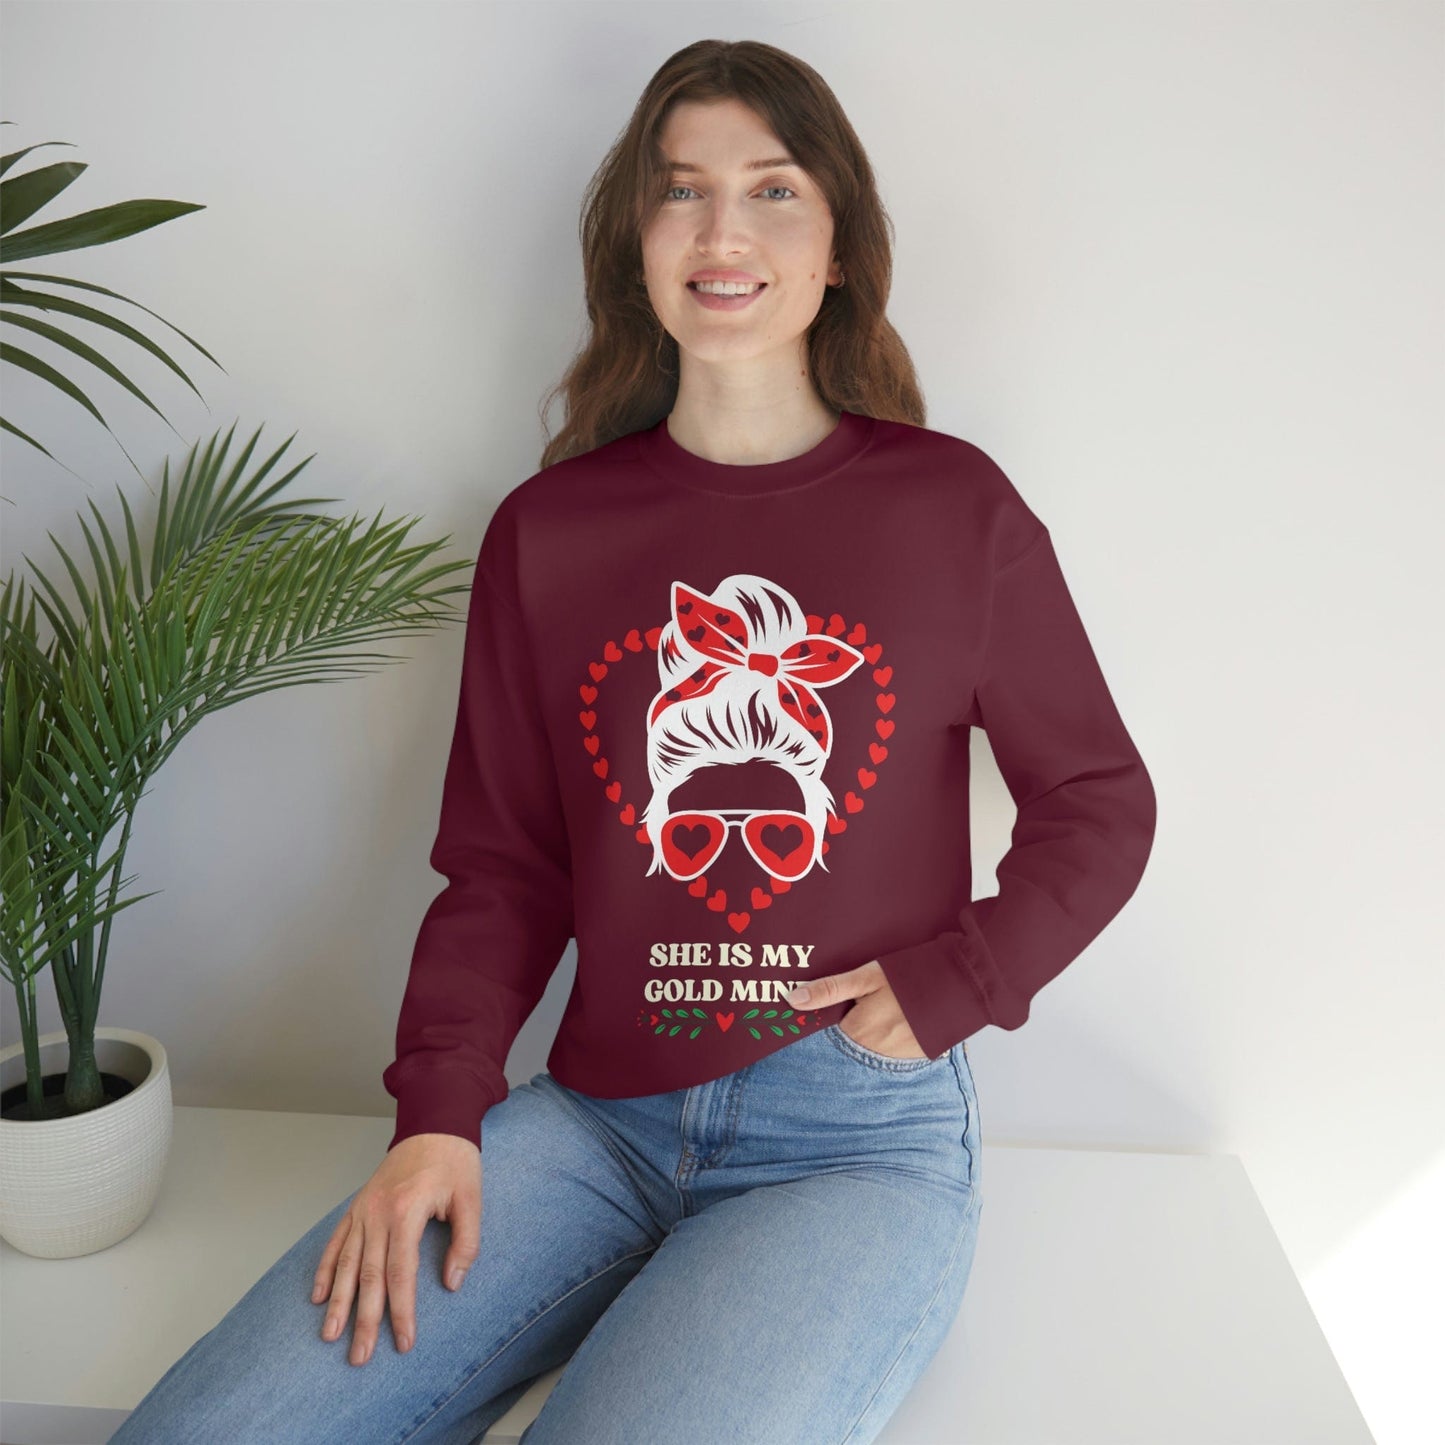 2023 Valentine's Day Gift: "She is My Gold Mine" Sweatshirt for Girlfriend